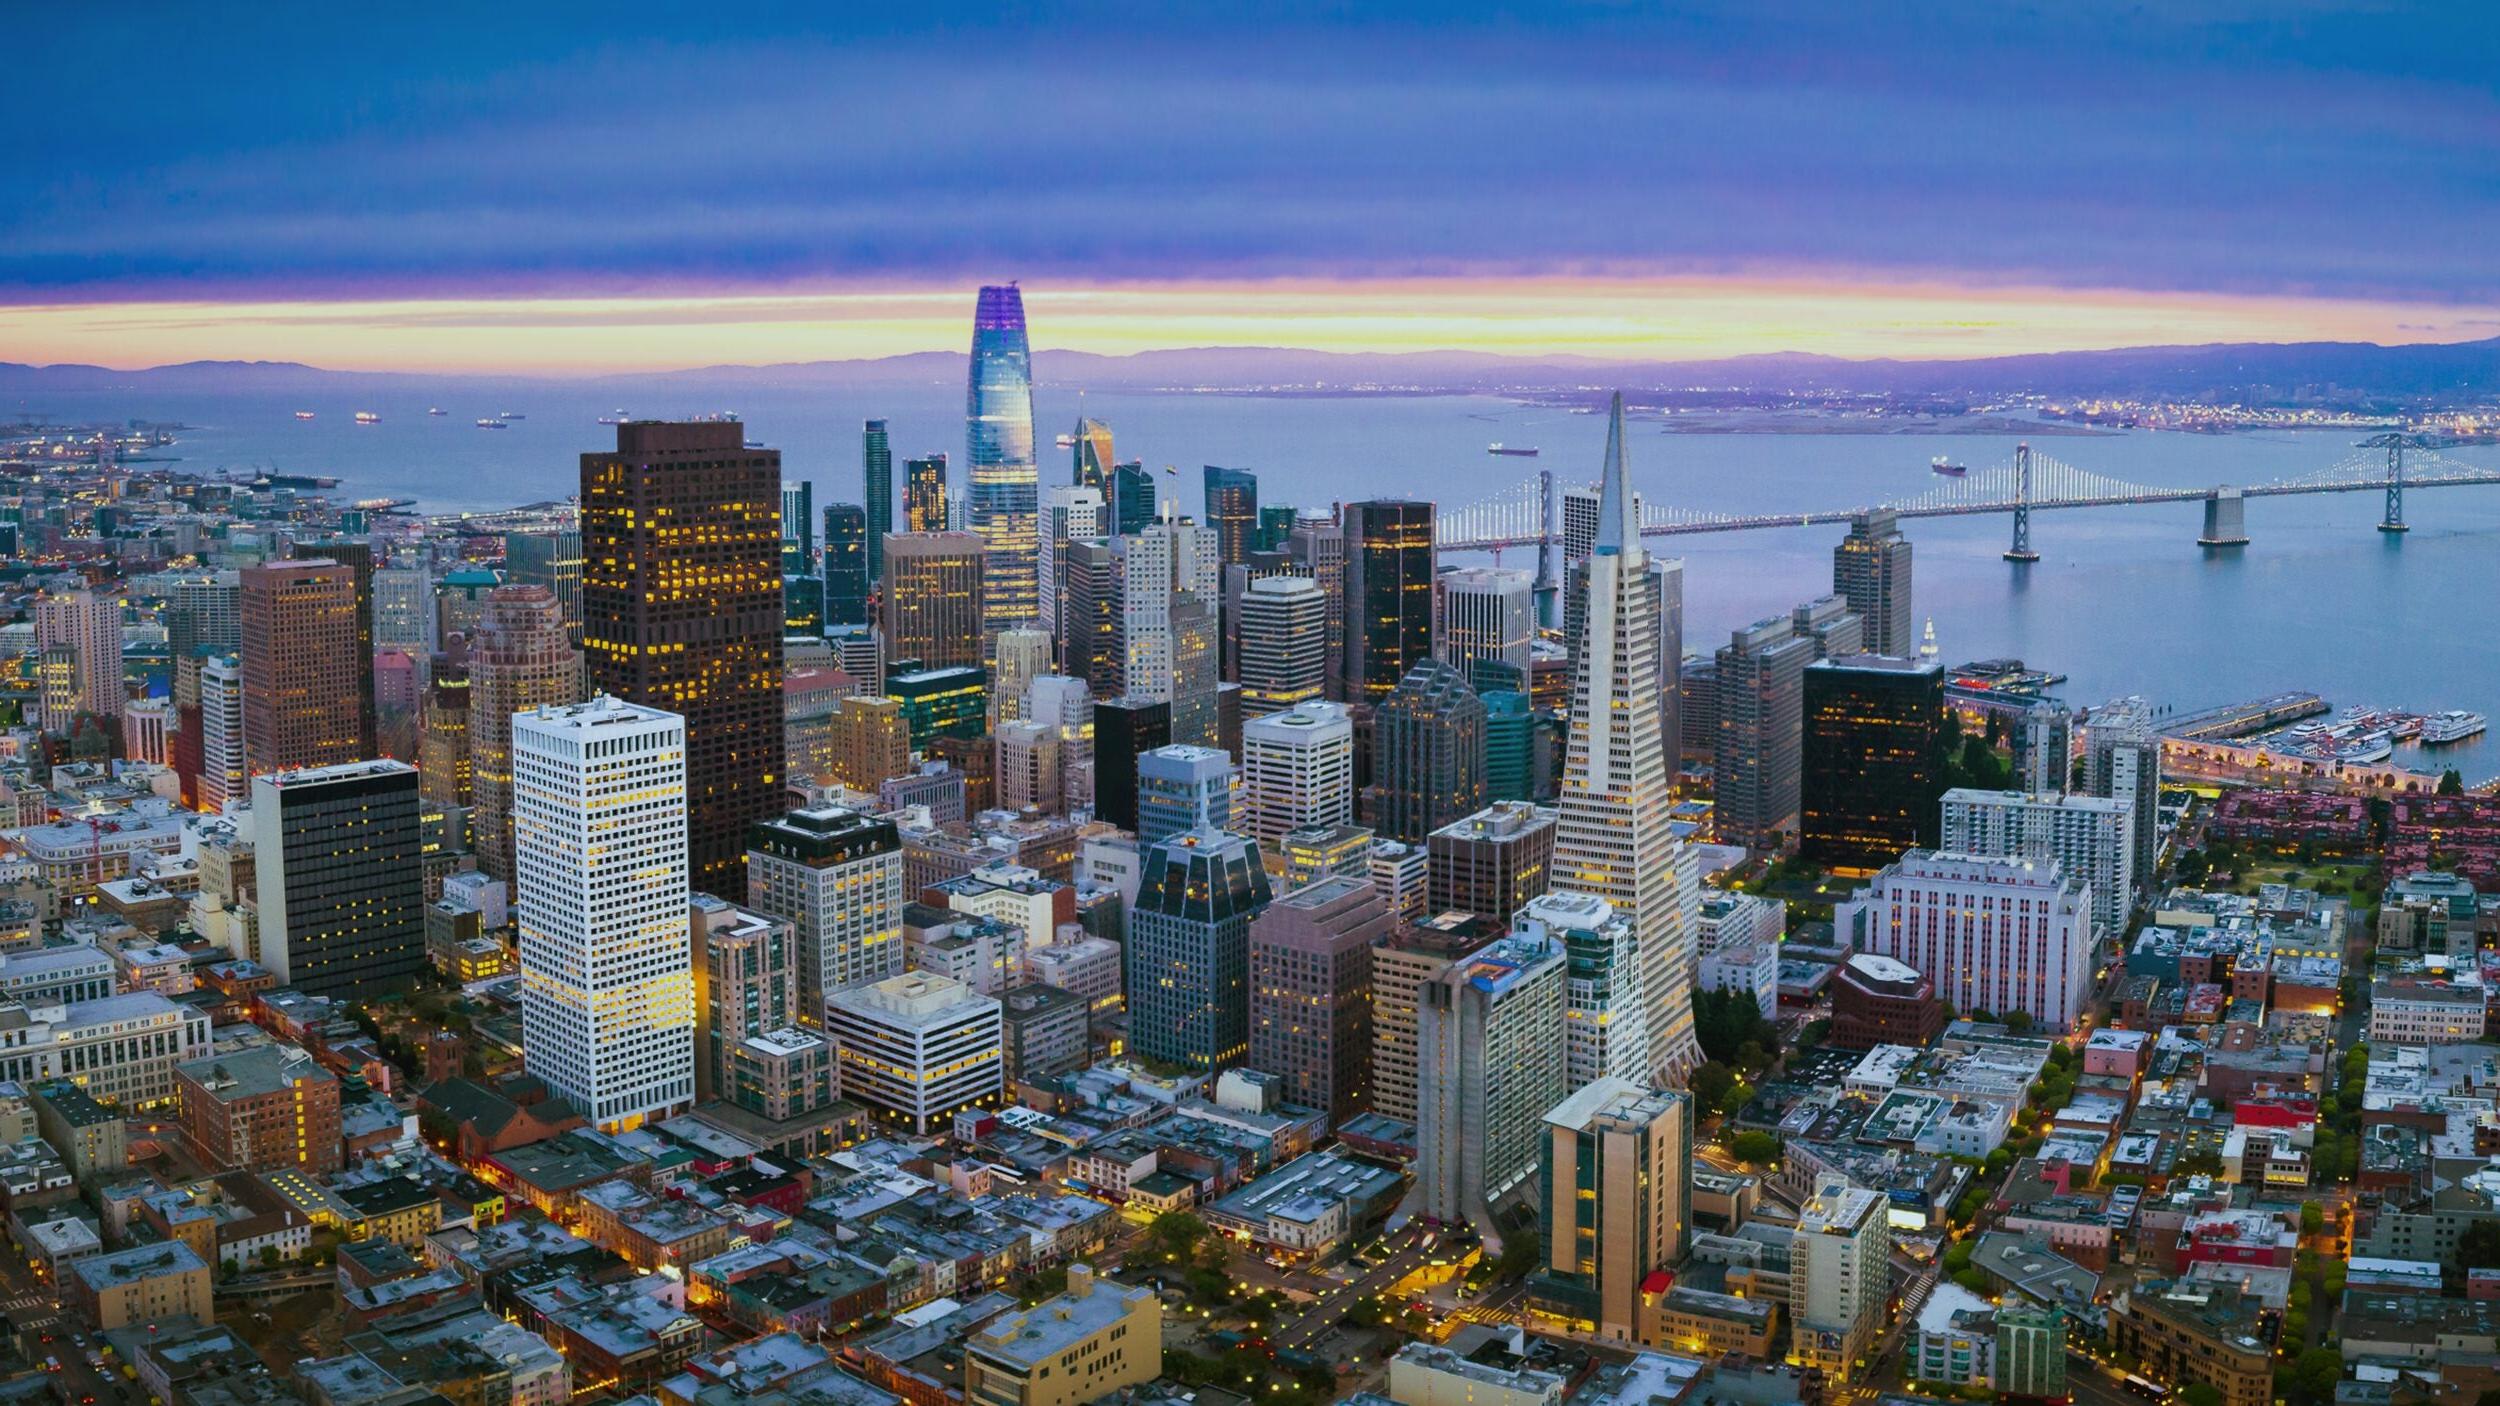 Downtown San Francisco skyline at night.